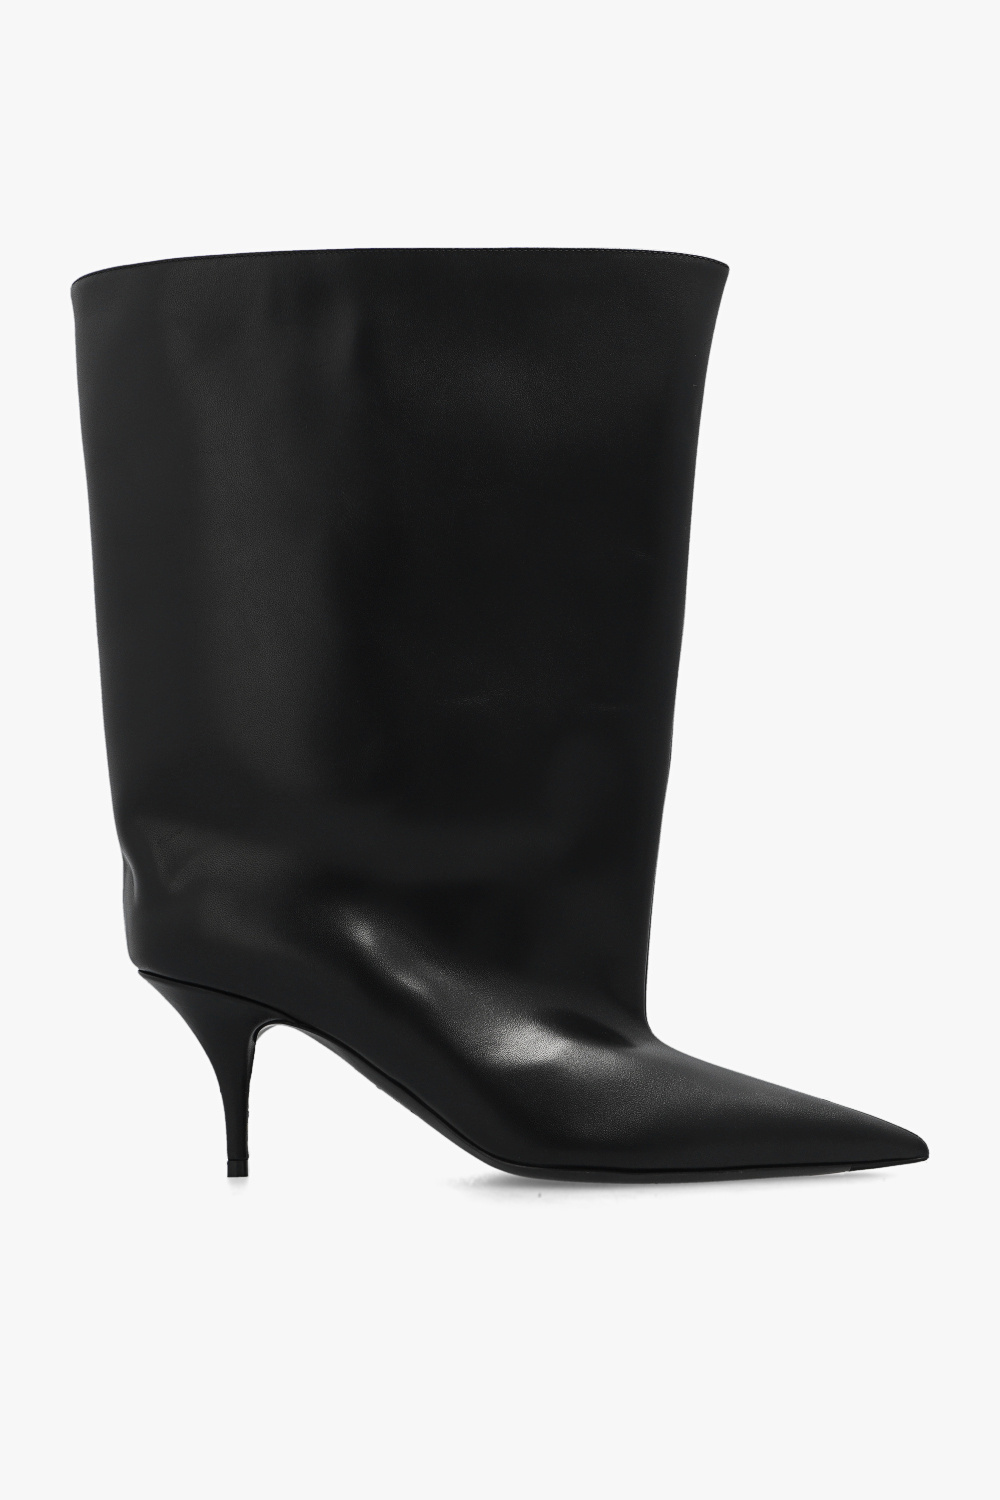 Balenciaga ‘Waders’ heeled ankle boots